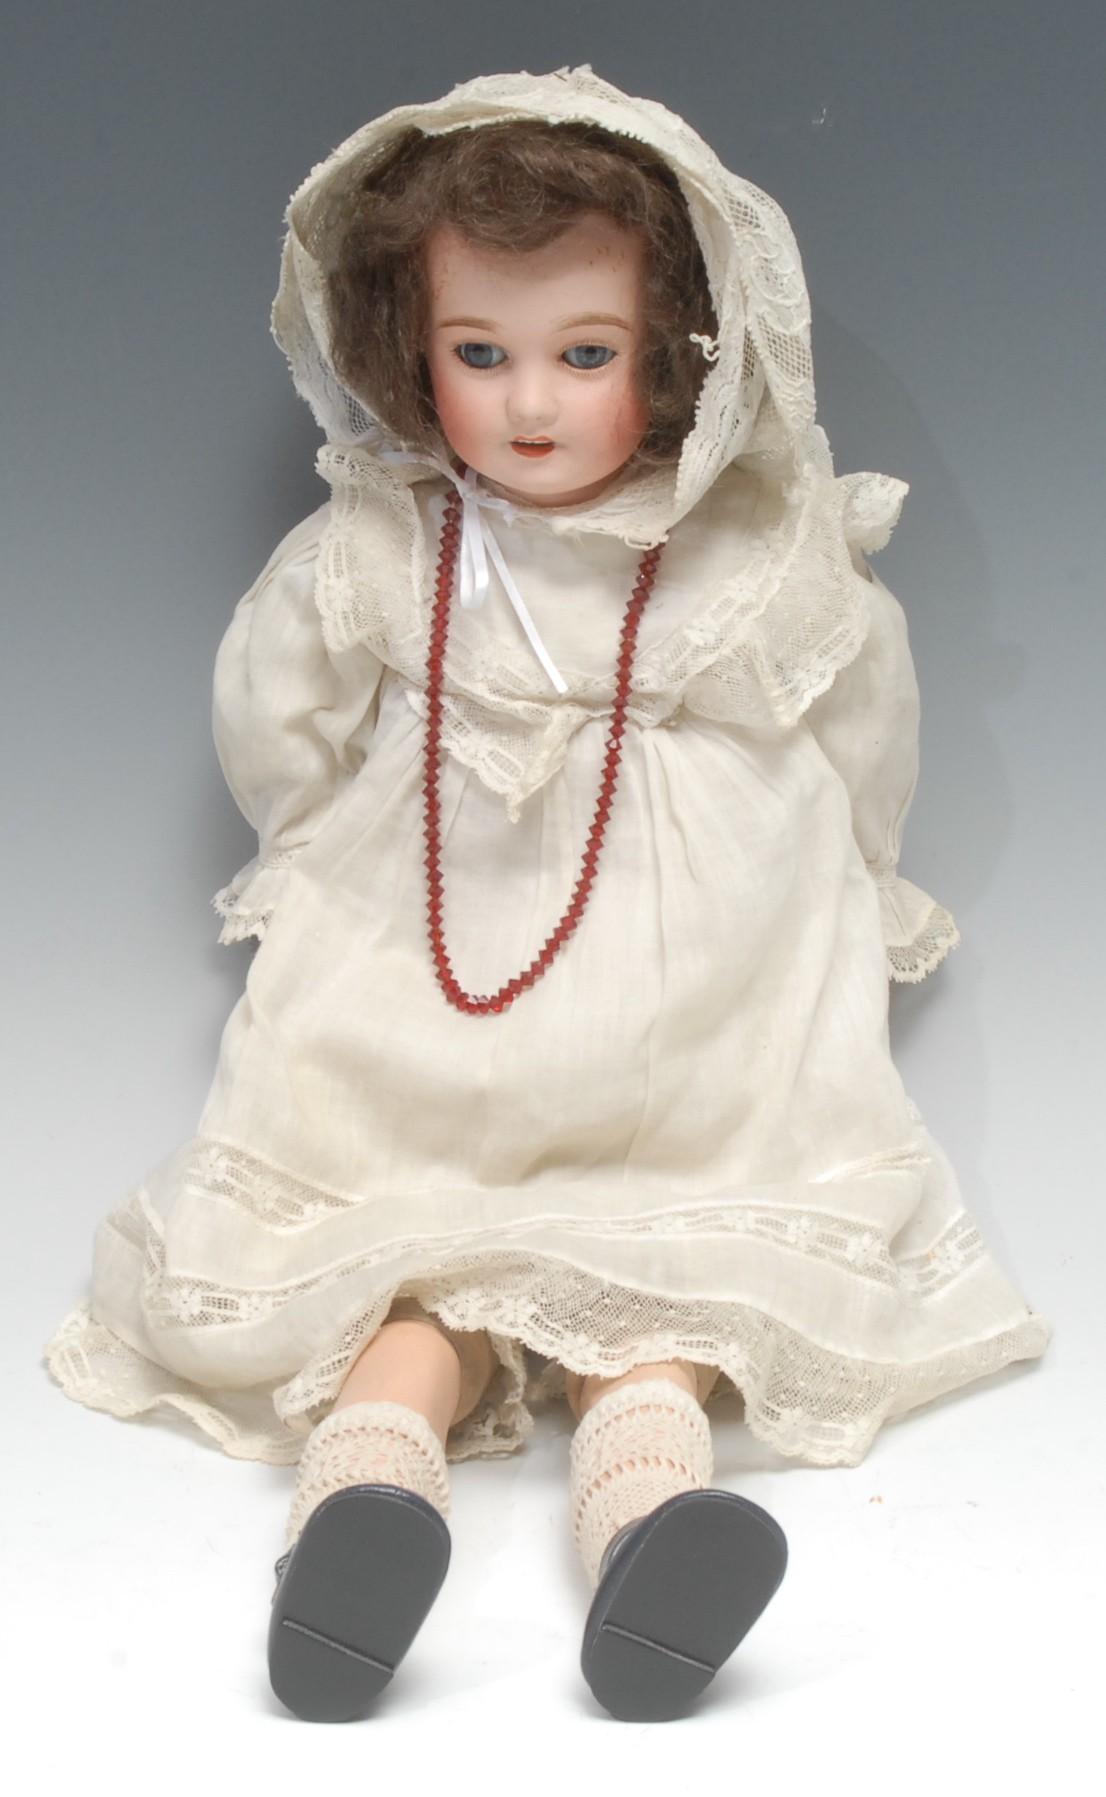 A Lanternier et Cie (France) bisque head and shoulder doll, part painted composition body, brown wig